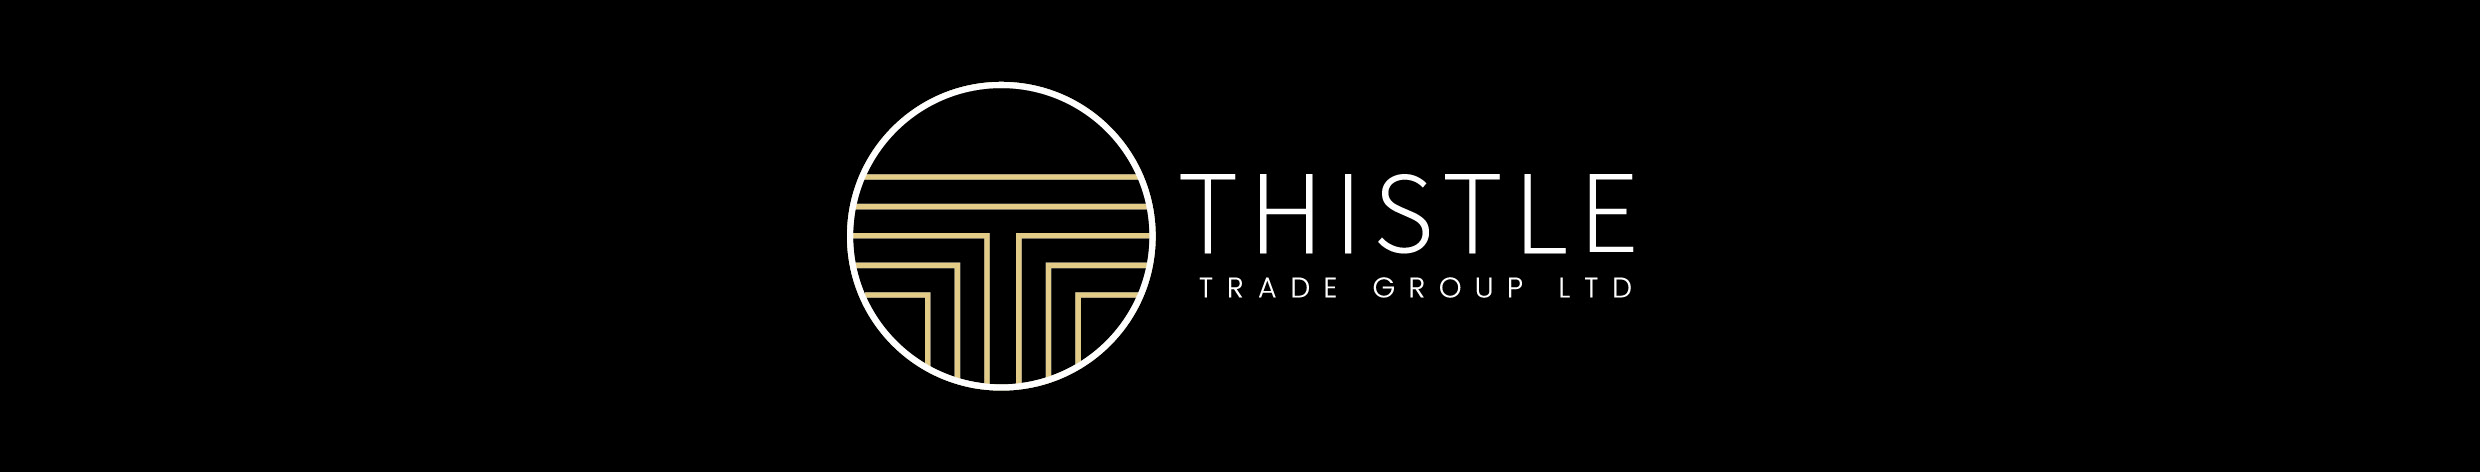 logo for Thistle Trade Group Ltd